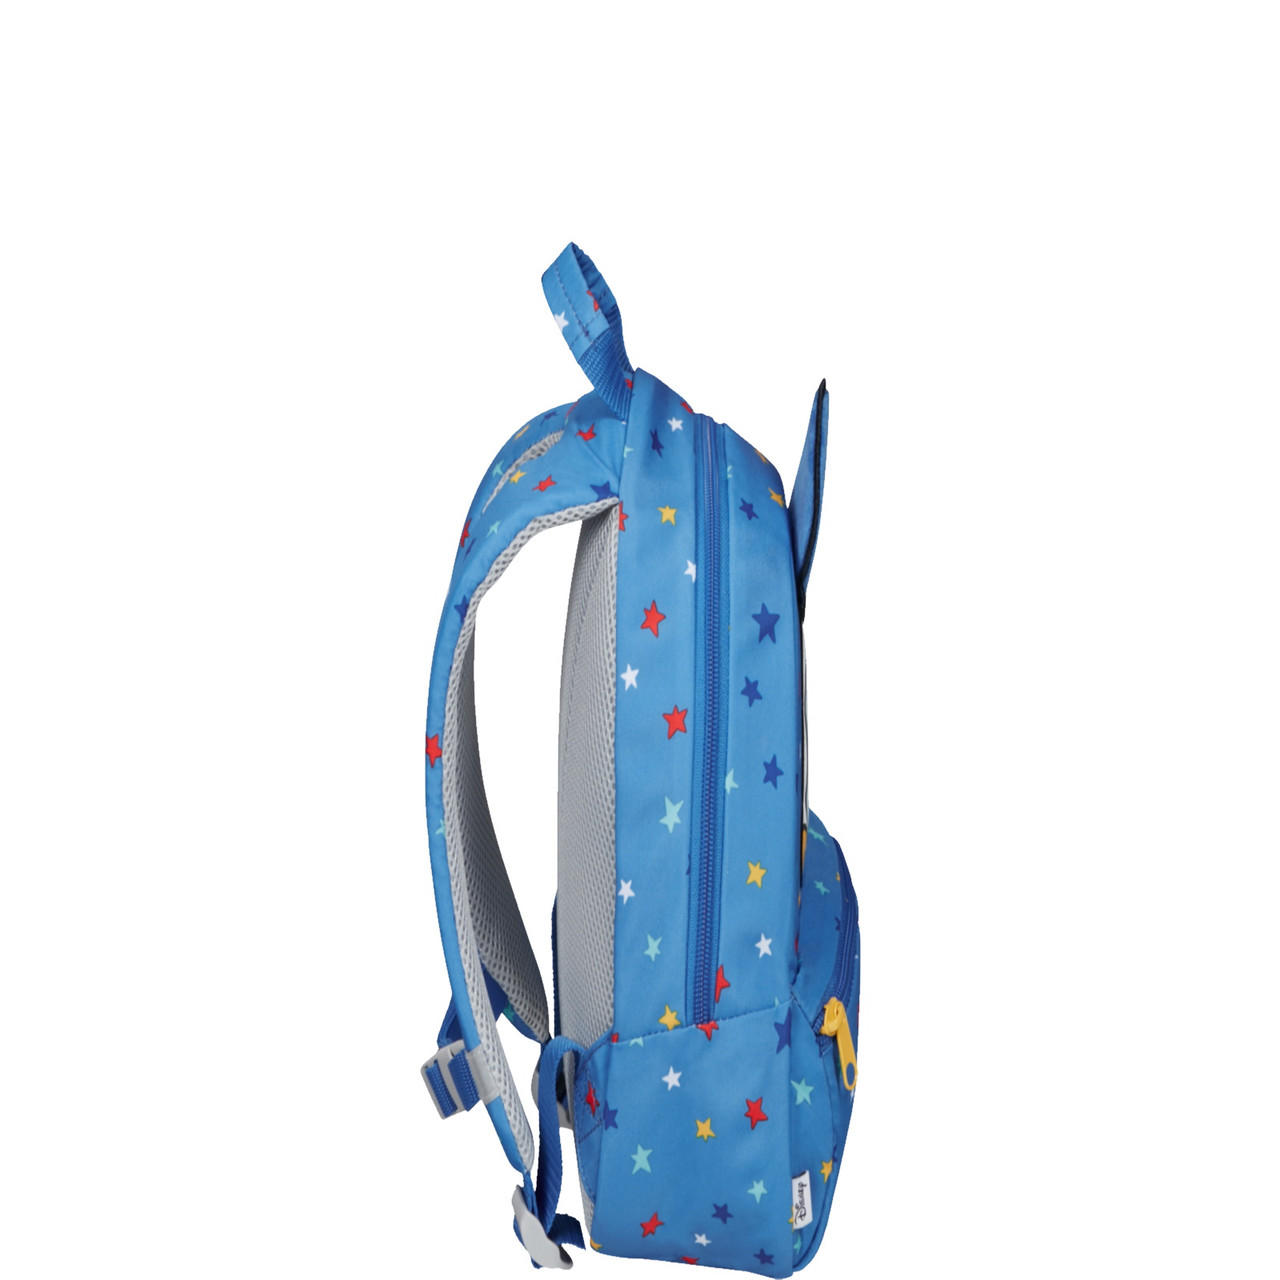 Luggage at Superstore Donald 2.0 Ultimate S Samsonite Disney Stars Backpack